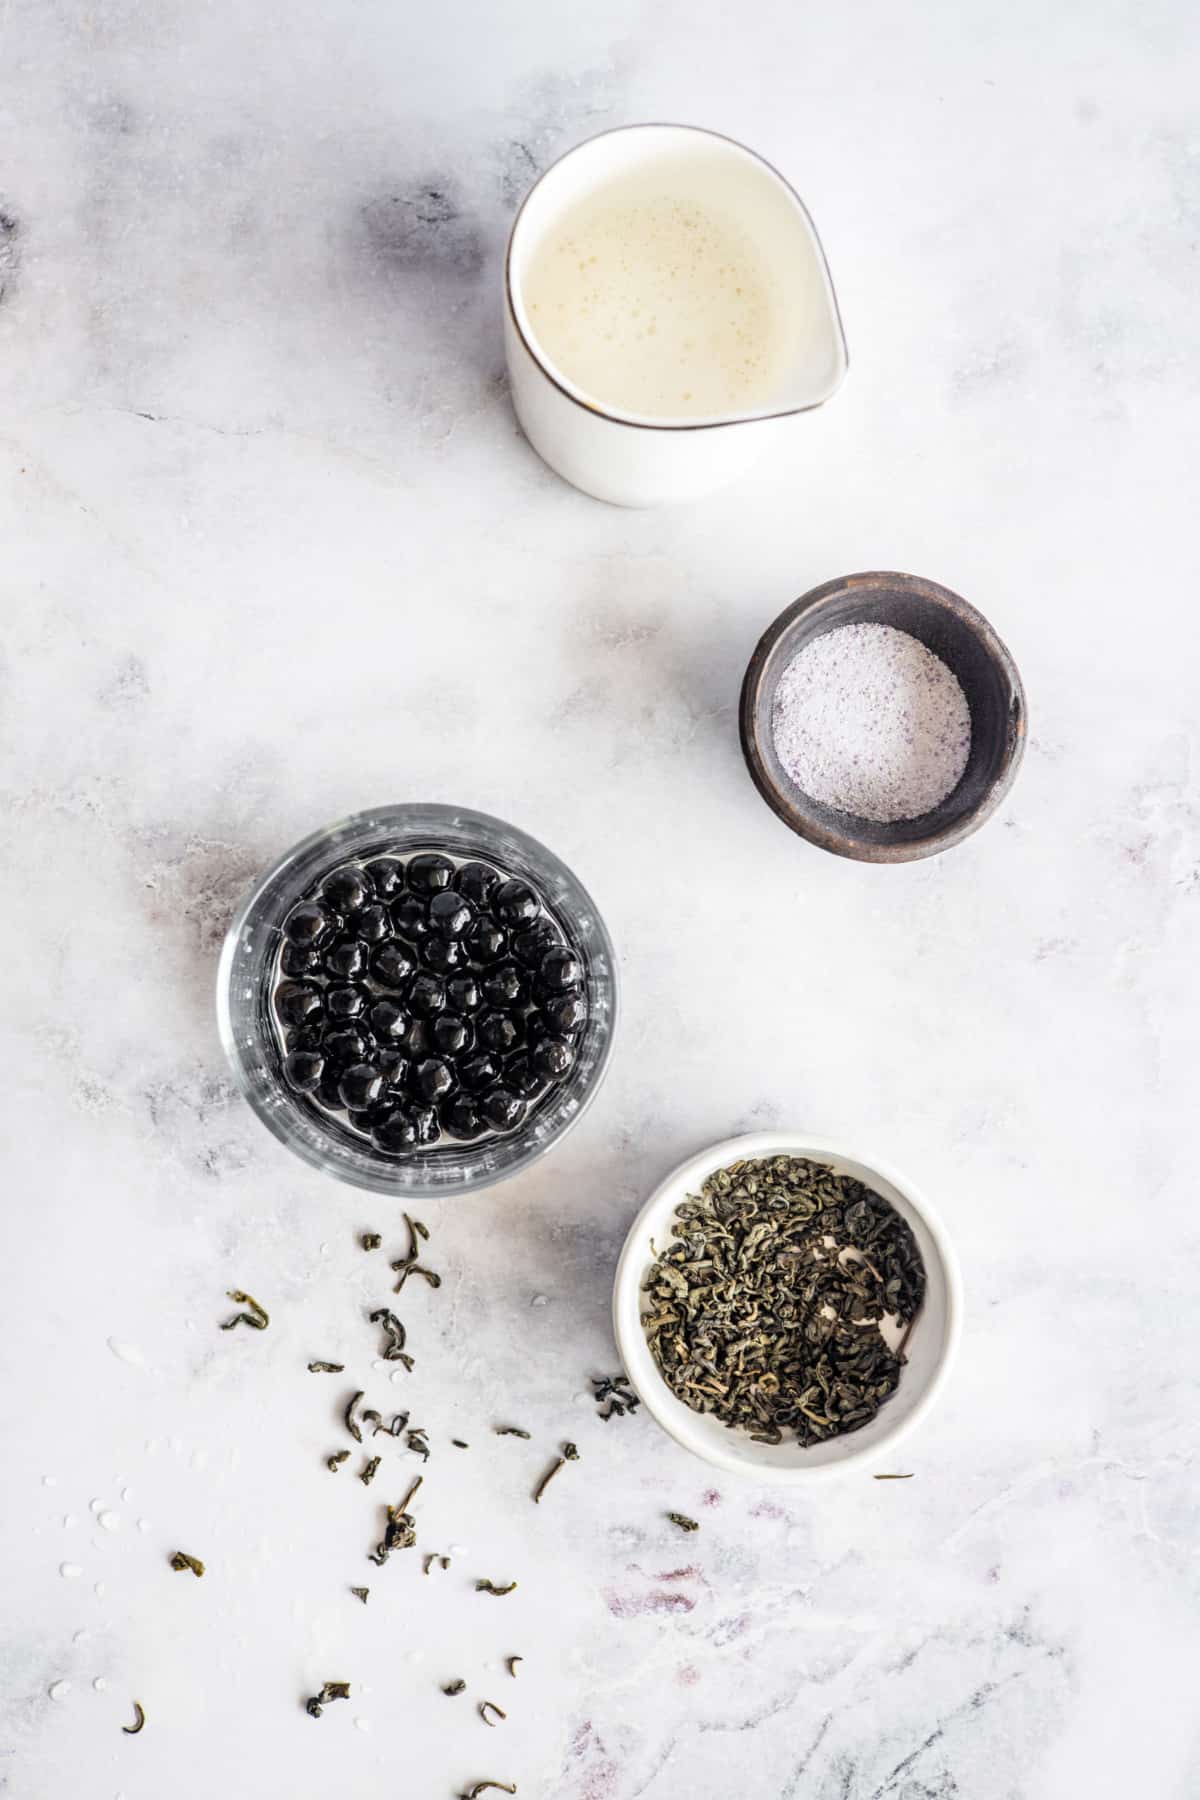 Ingredients for taro milk tea: taro powder, milk, boba pearls (optional), and Jasmine green tea leaves.